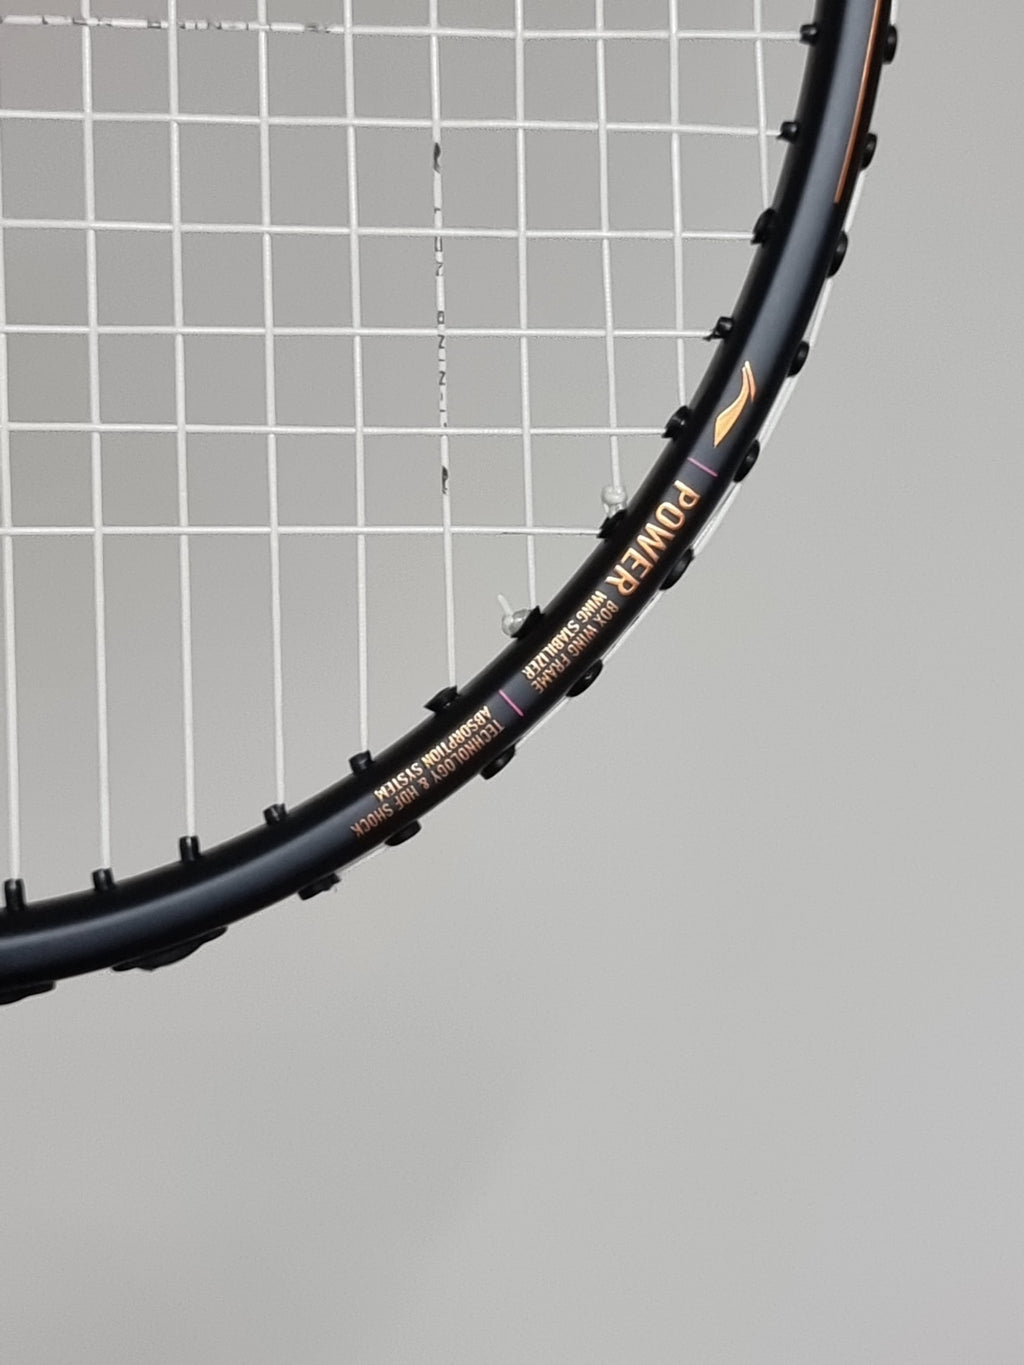 Li-Ning AX Force 80 4u Badminton Racket - badminton racket review